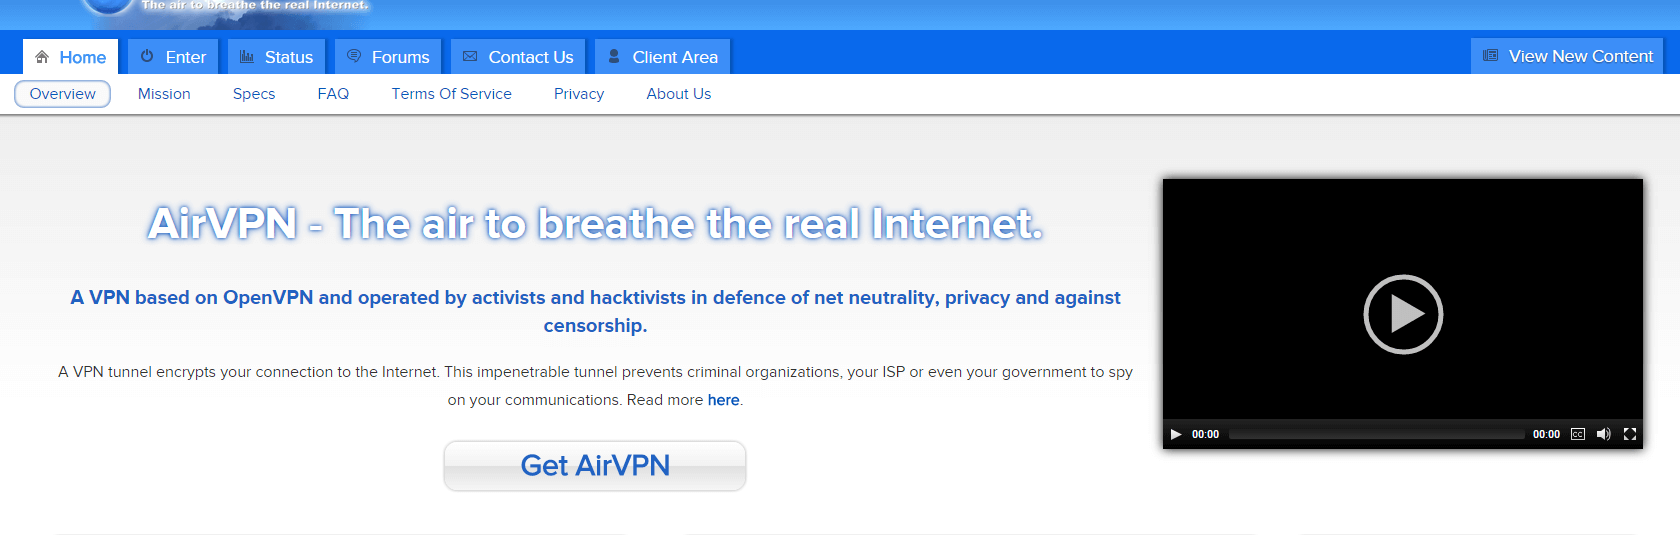 AirVPN Vs TorGuard VPN 